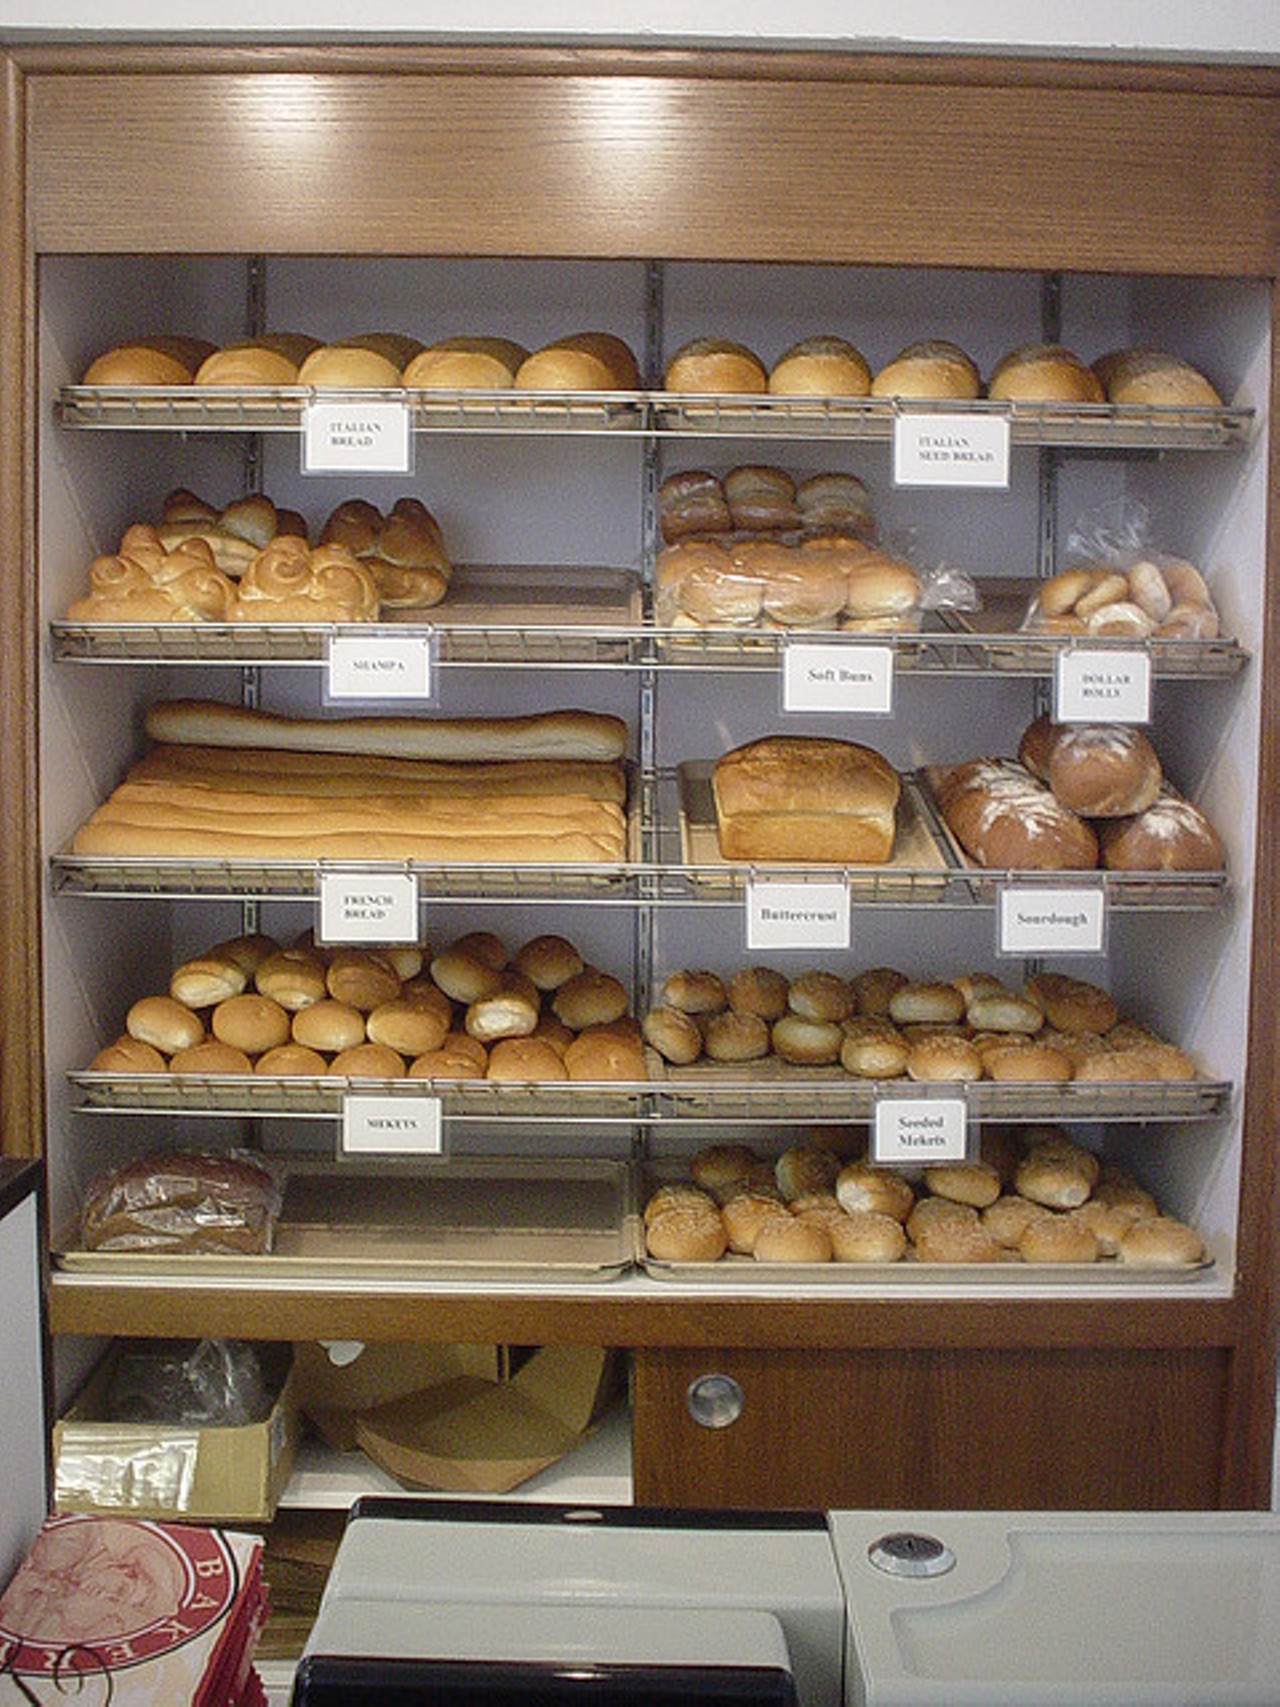 Bread's the bedrock at Missouri Baking Co. Photo courtesy Flickr/Trish